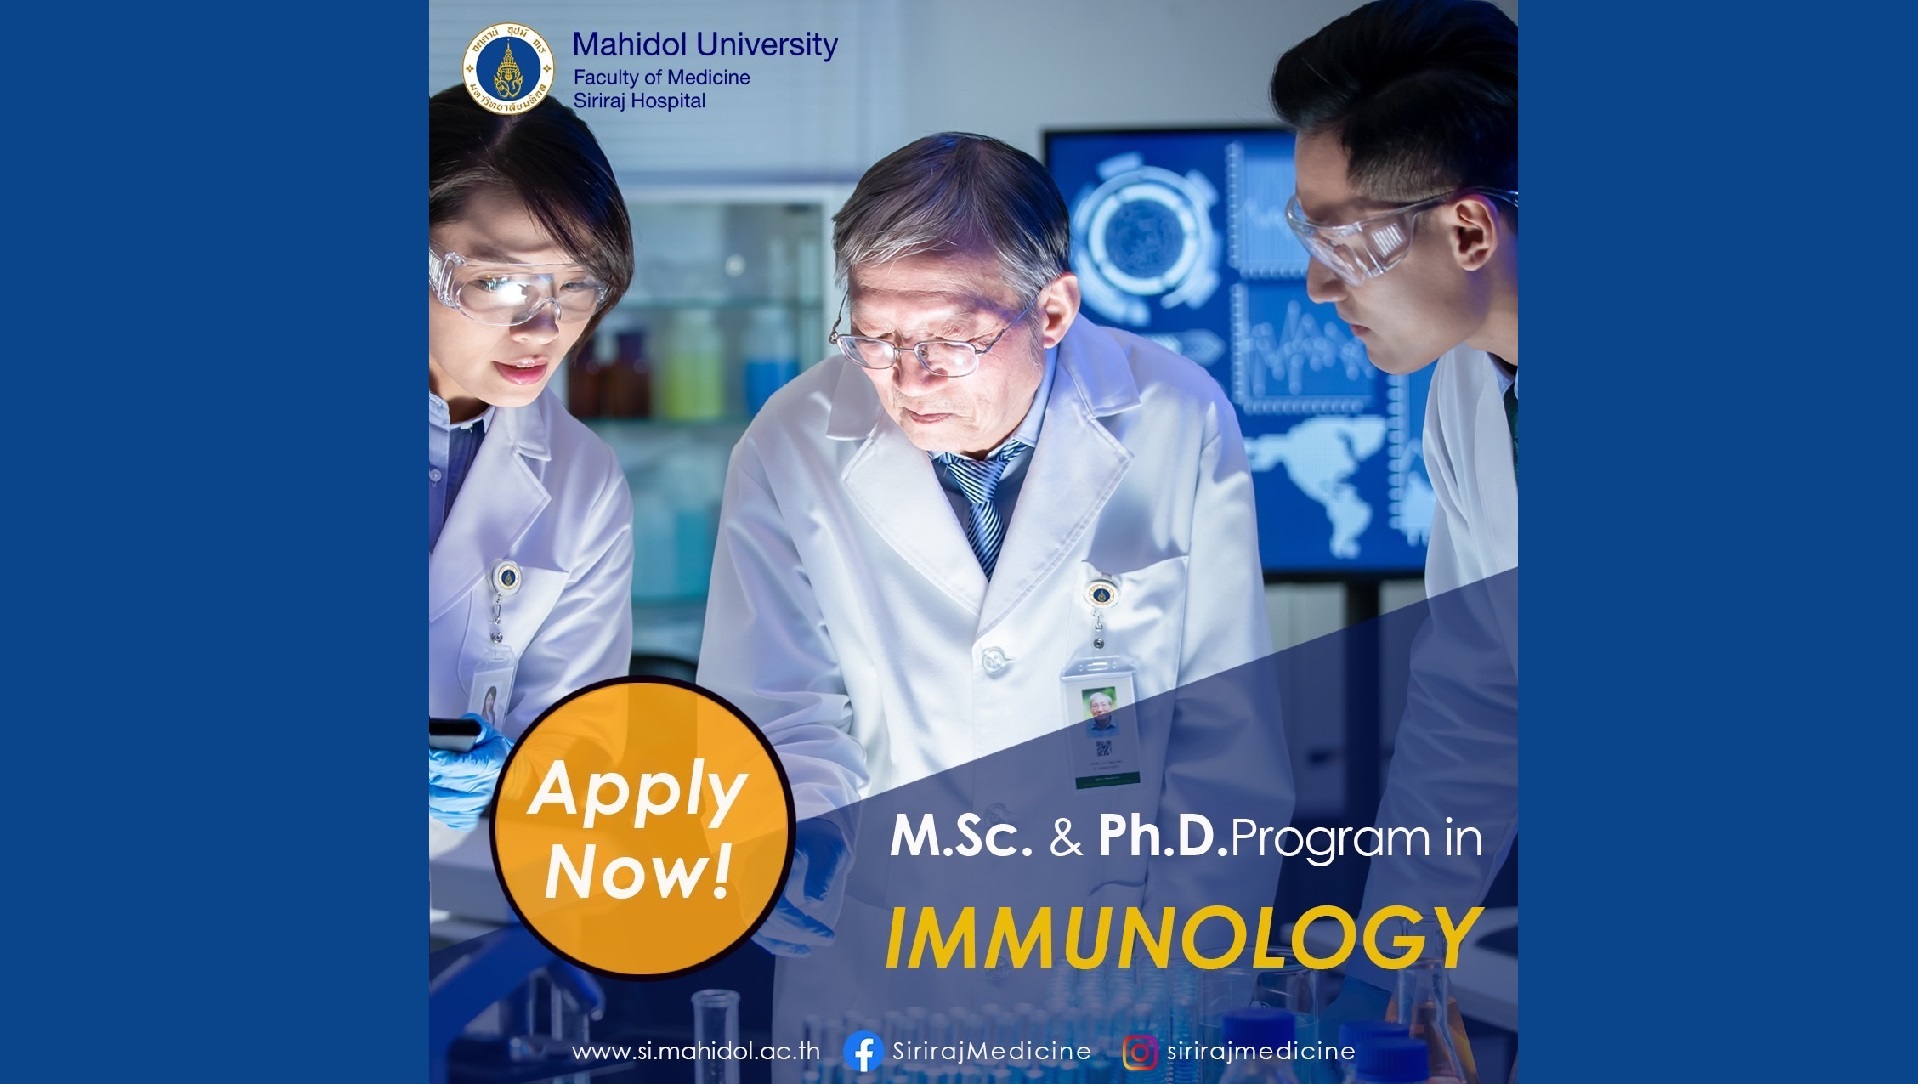 M.Sc. & Ph.D. Program in Immunology